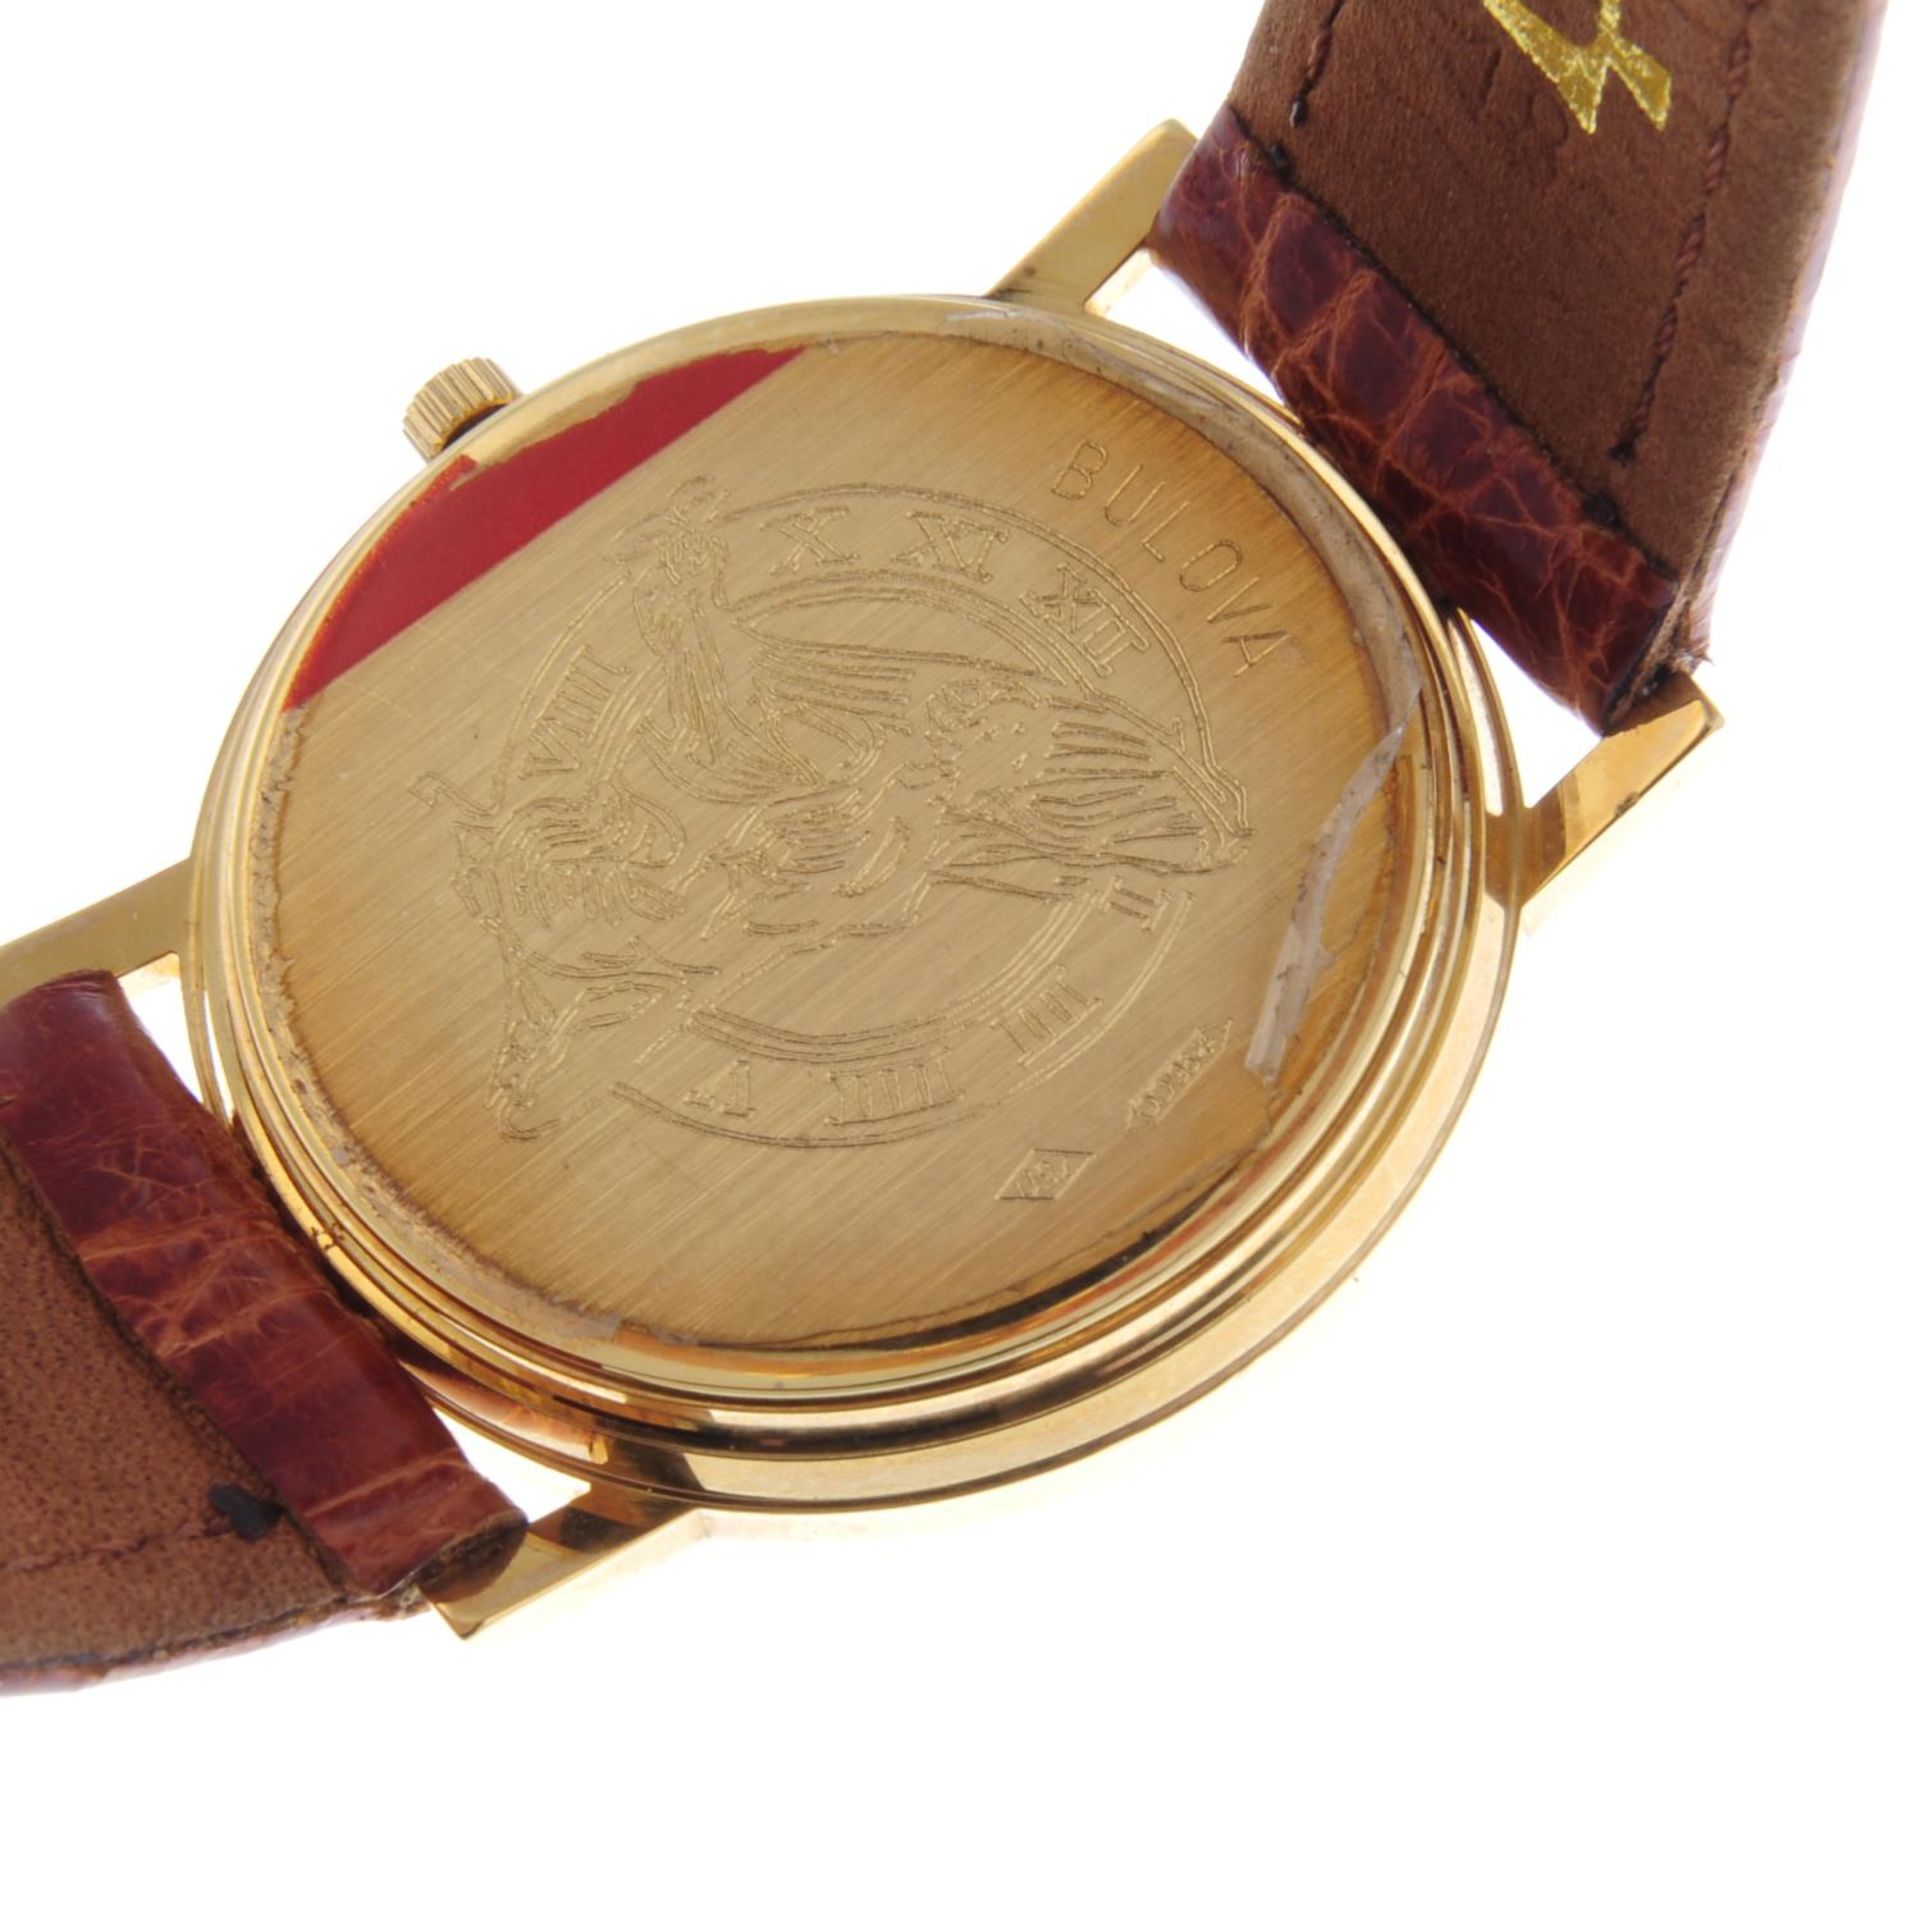 BULOVA - a gentleman's wrist watch. - Image 2 of 3